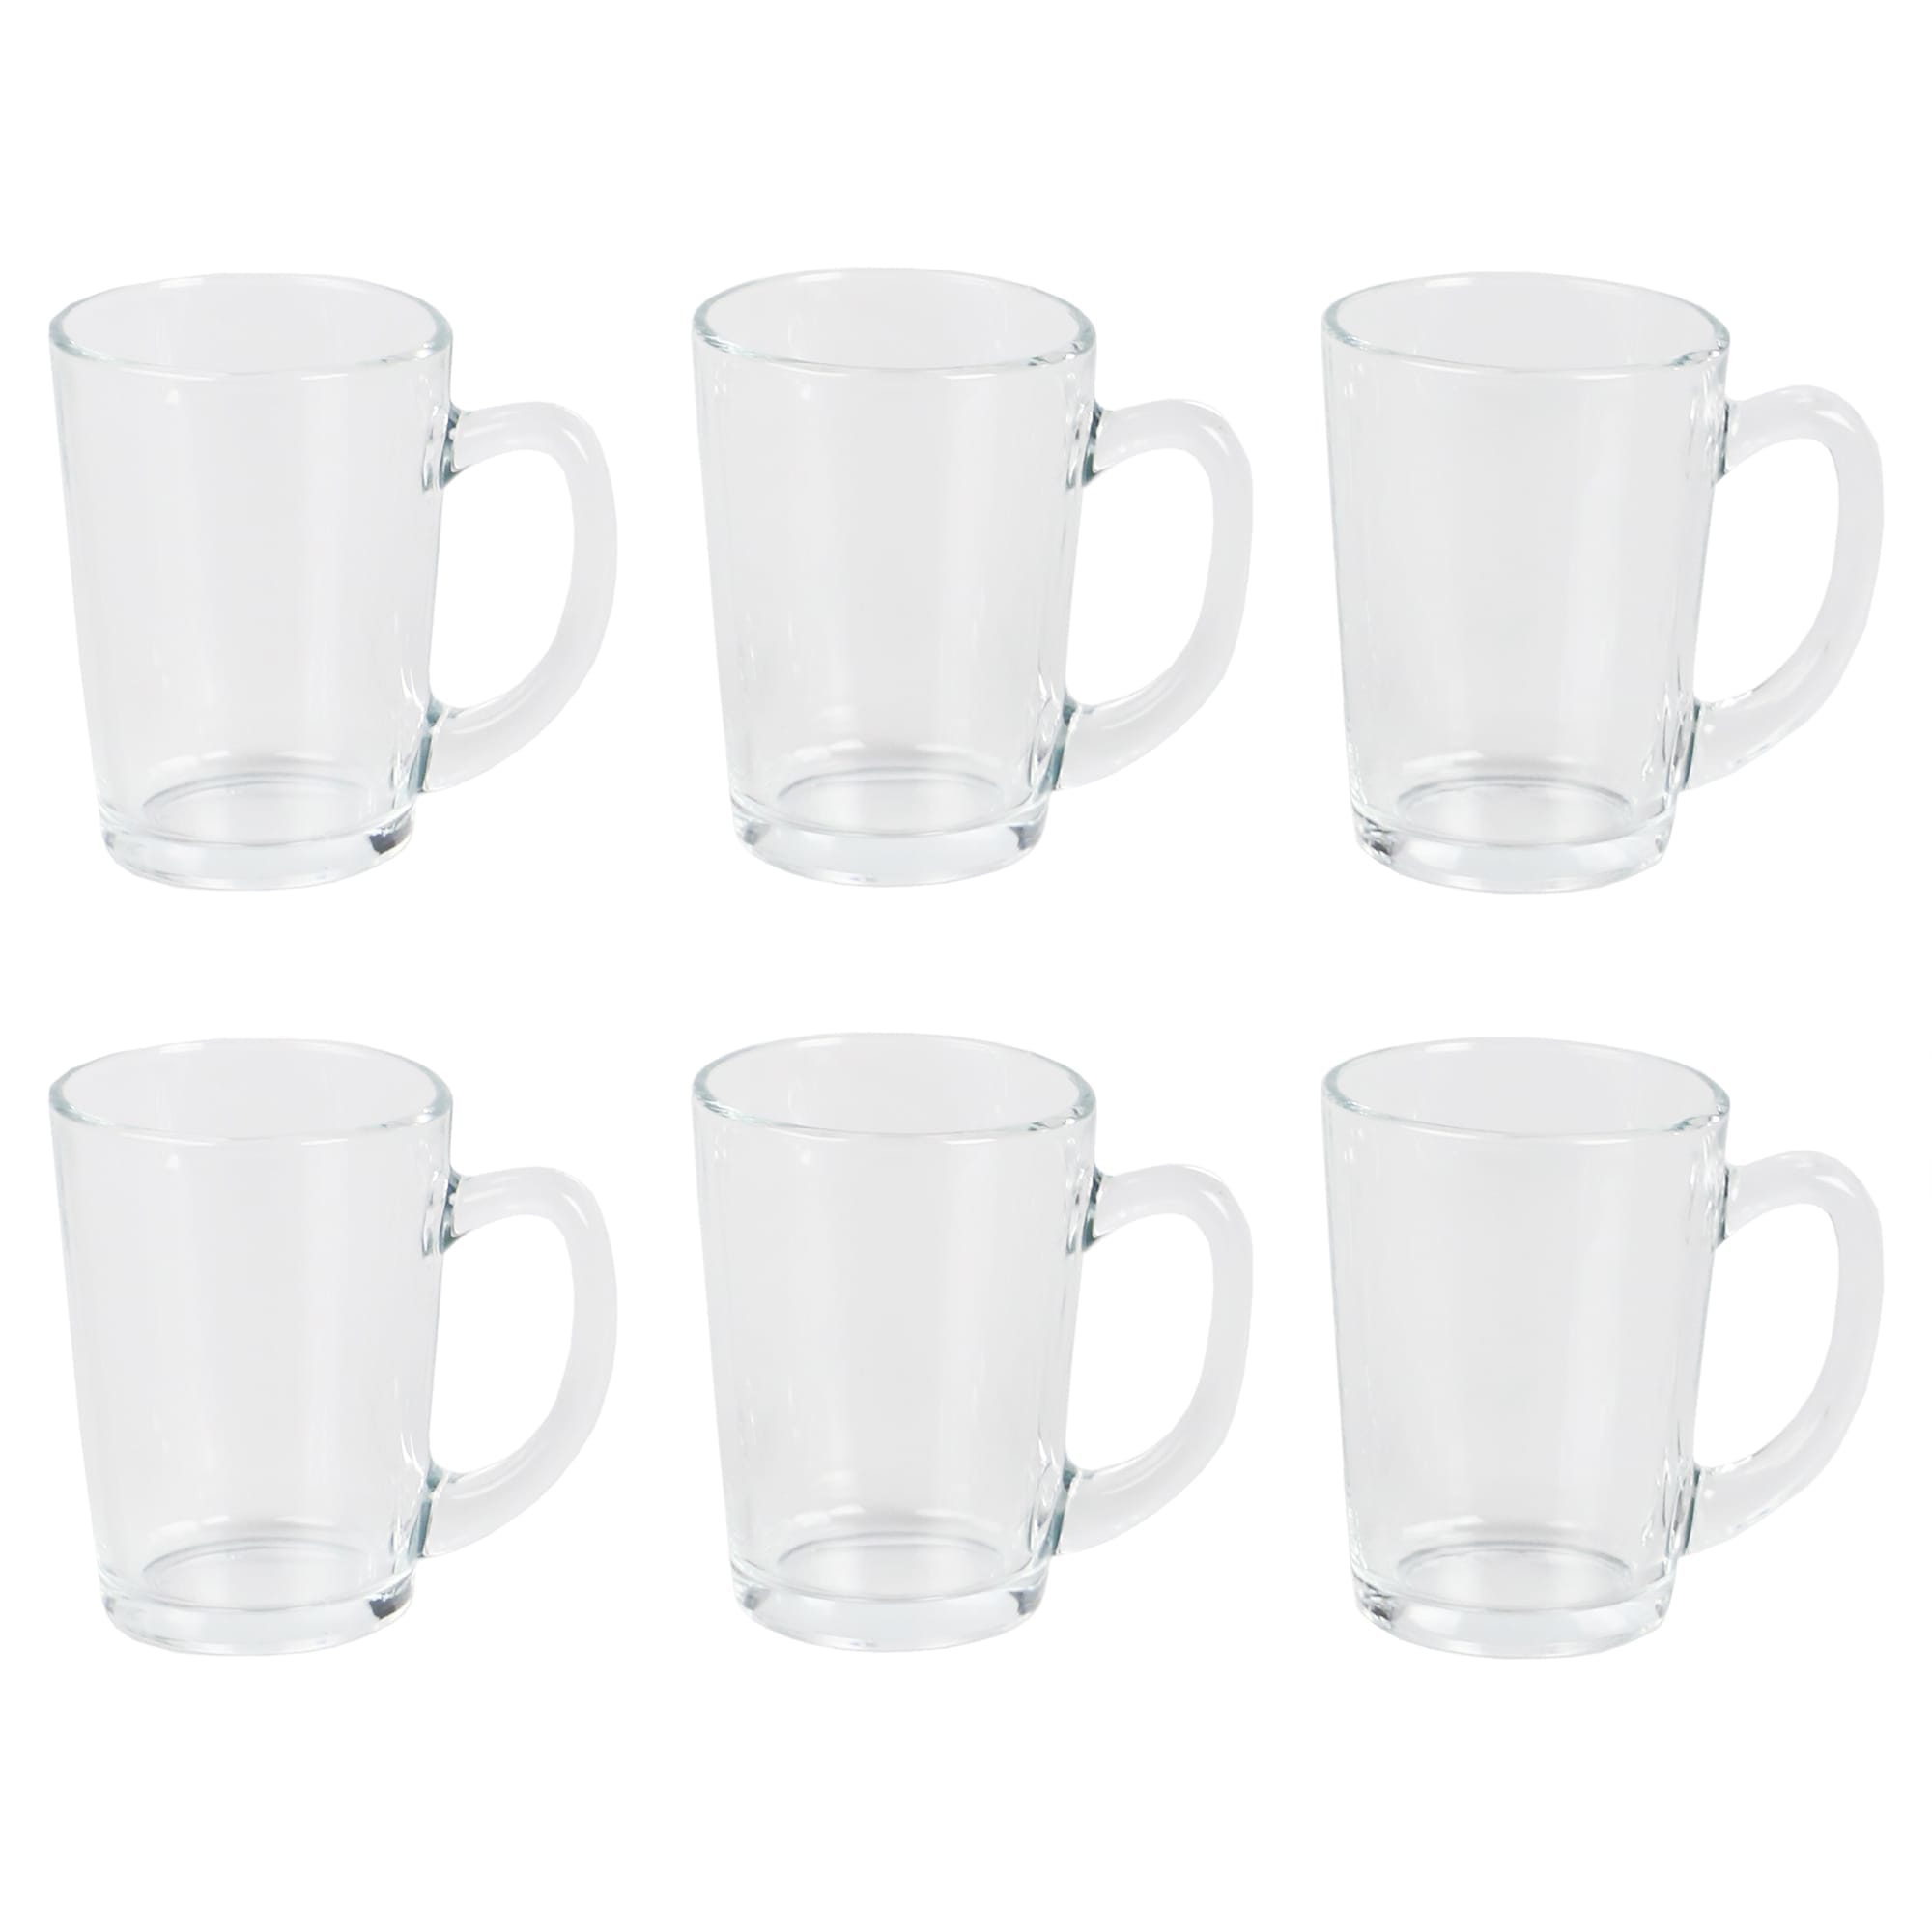 Home Basics Collins 10 oz Glass Mug Set, (Pack of 6), Clear $8 EACH, CASE PACK OF 6